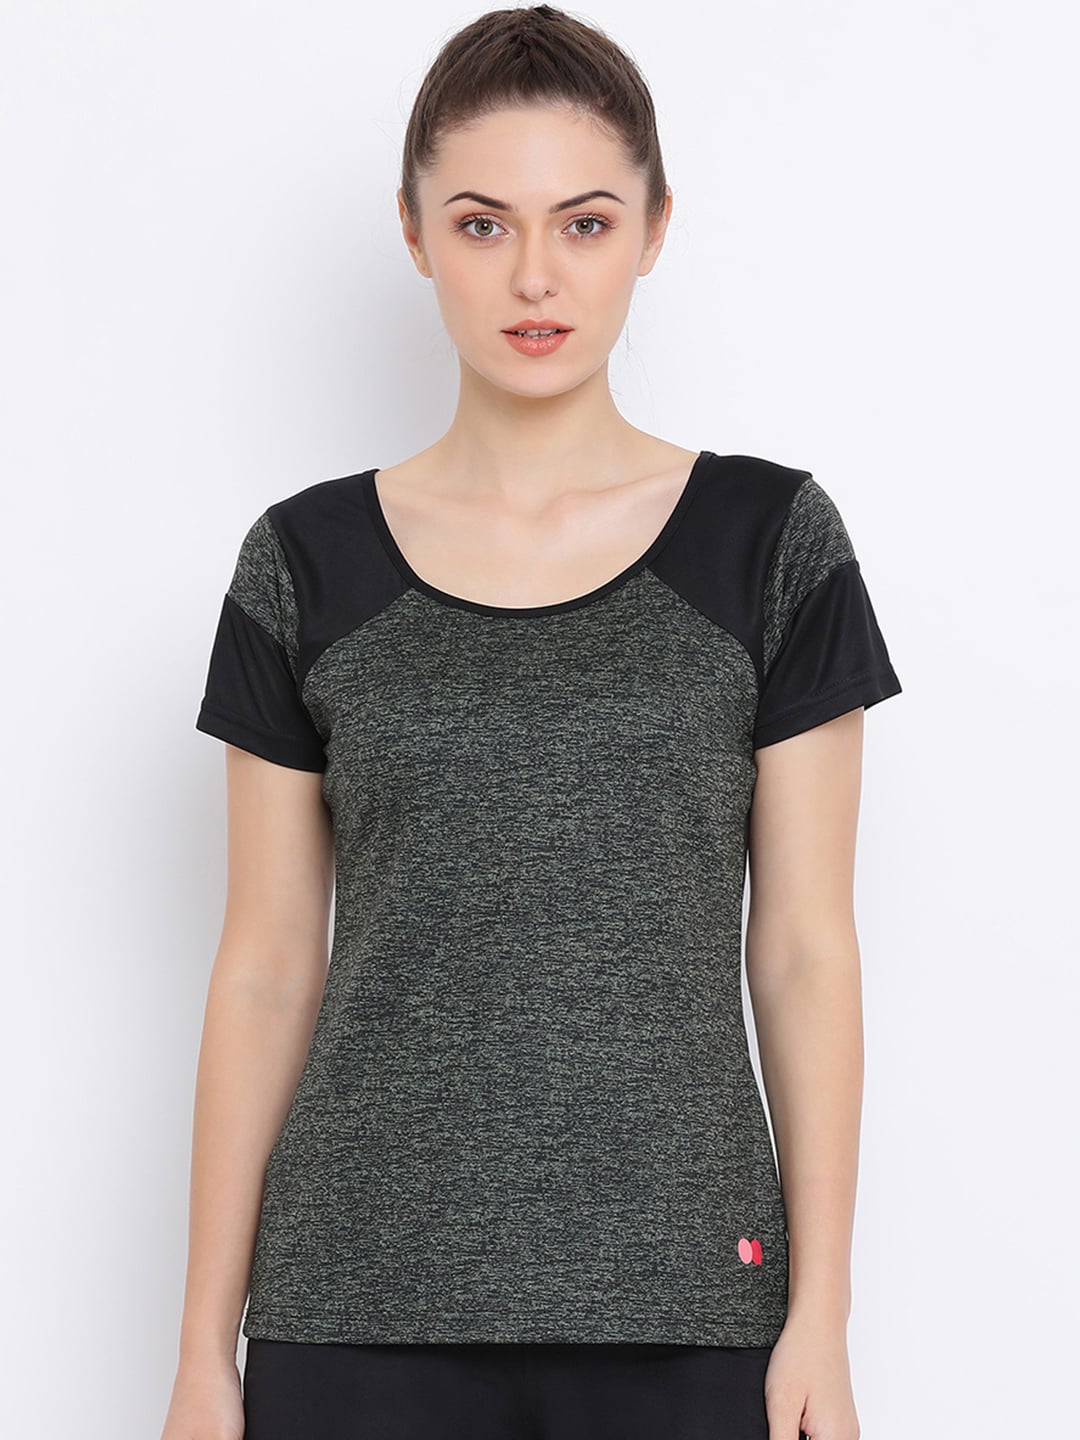 Clovia Women Charcoal Grey & Black Colourblocked Round Neck T-shirt Price in India